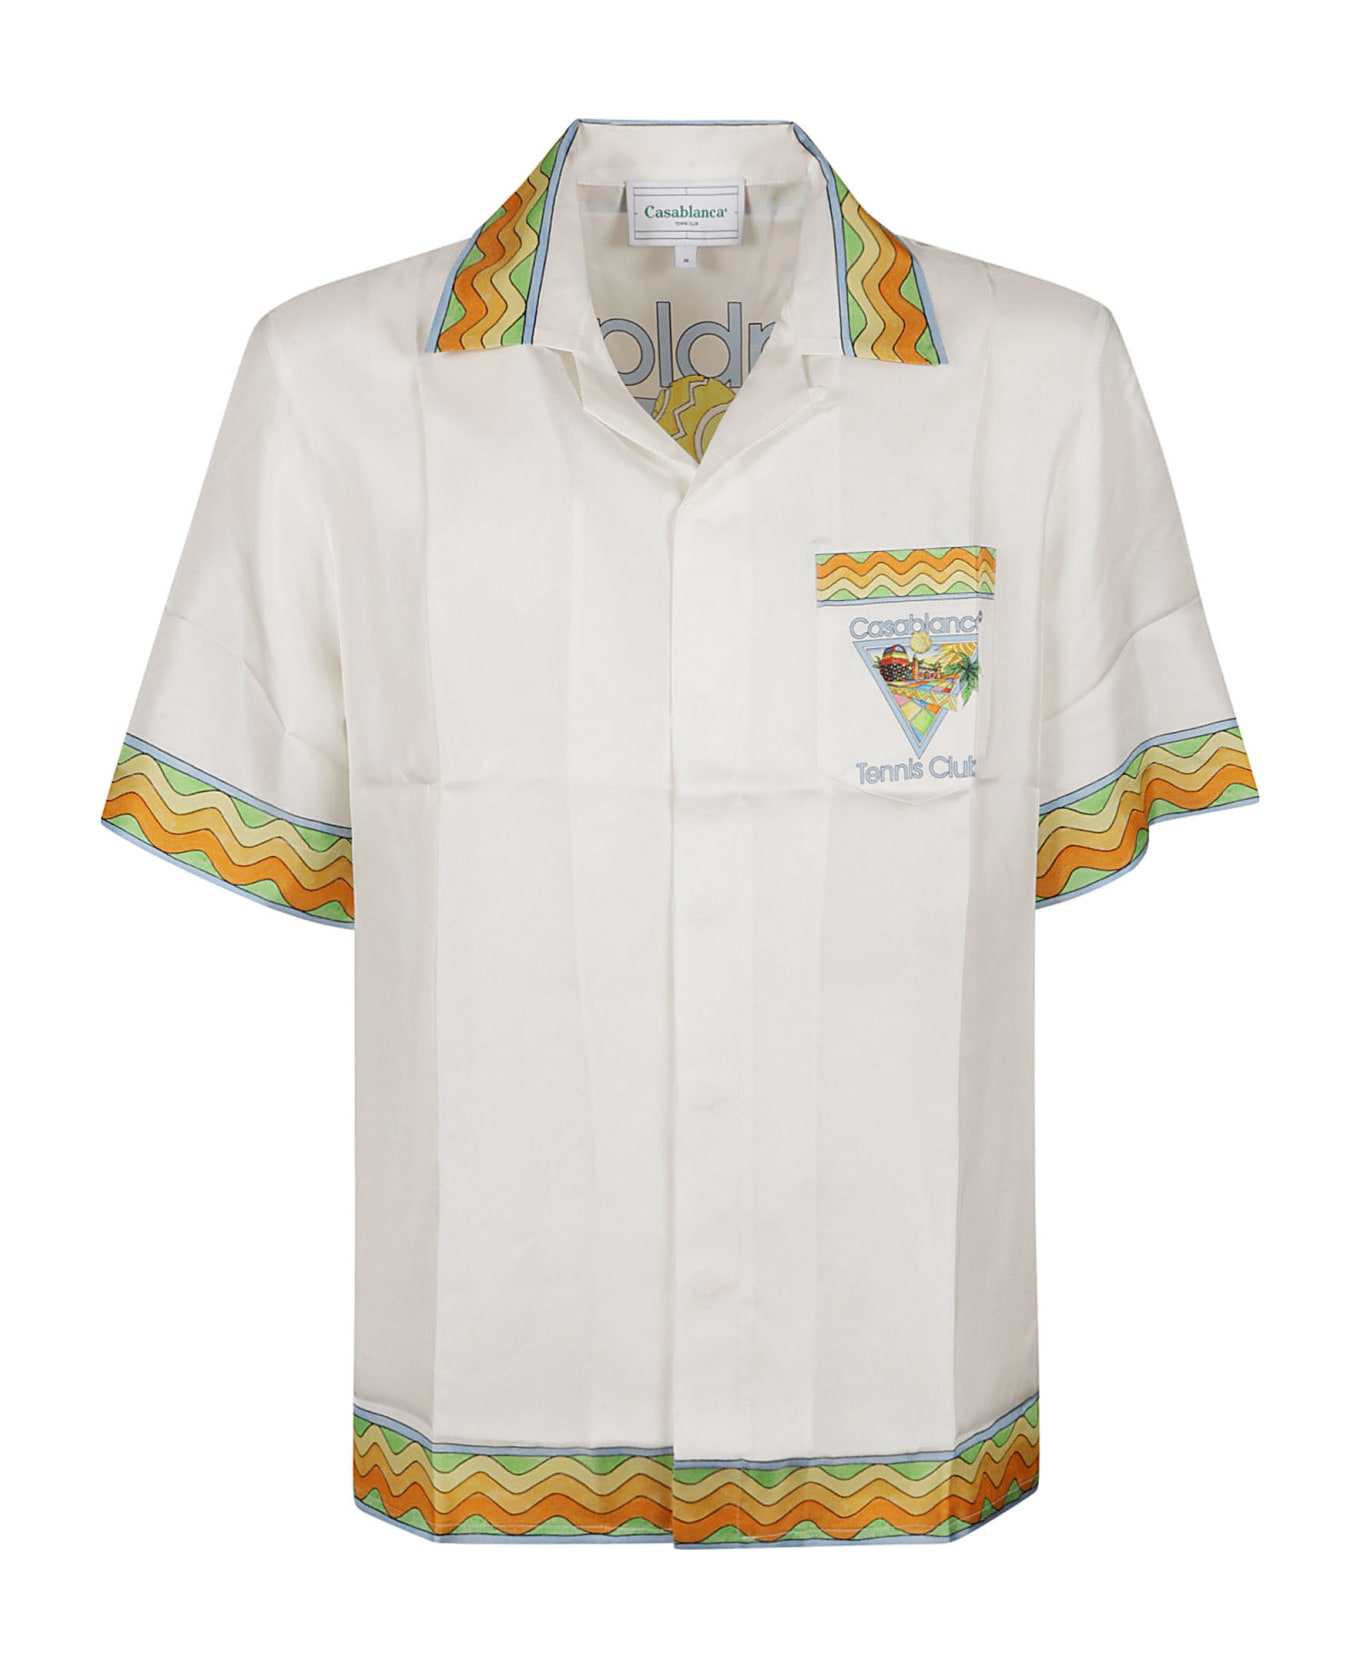 Casablanca 'afro Cubism Tennis Club' Silk Shirt - White シャツ